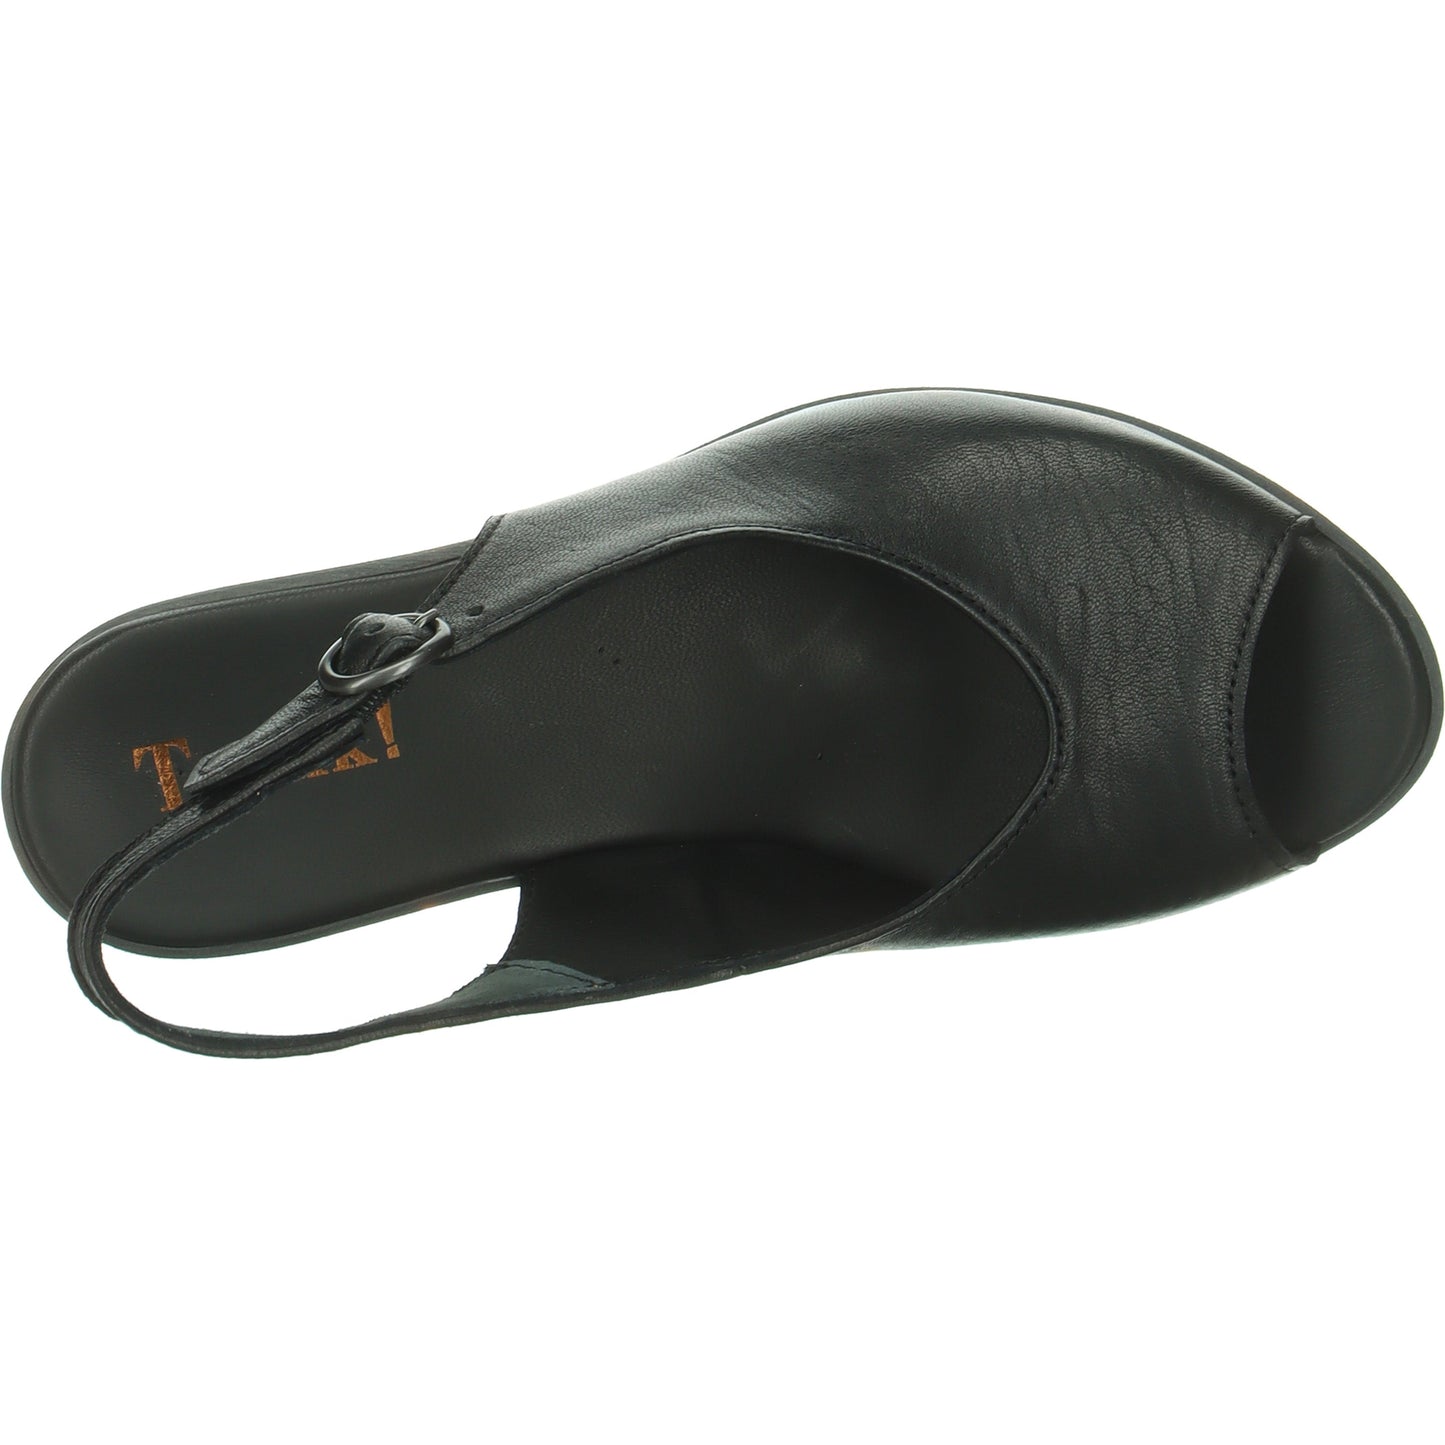 Think Shoes USA Zeppa Sandals - Black - 000754-0000BL